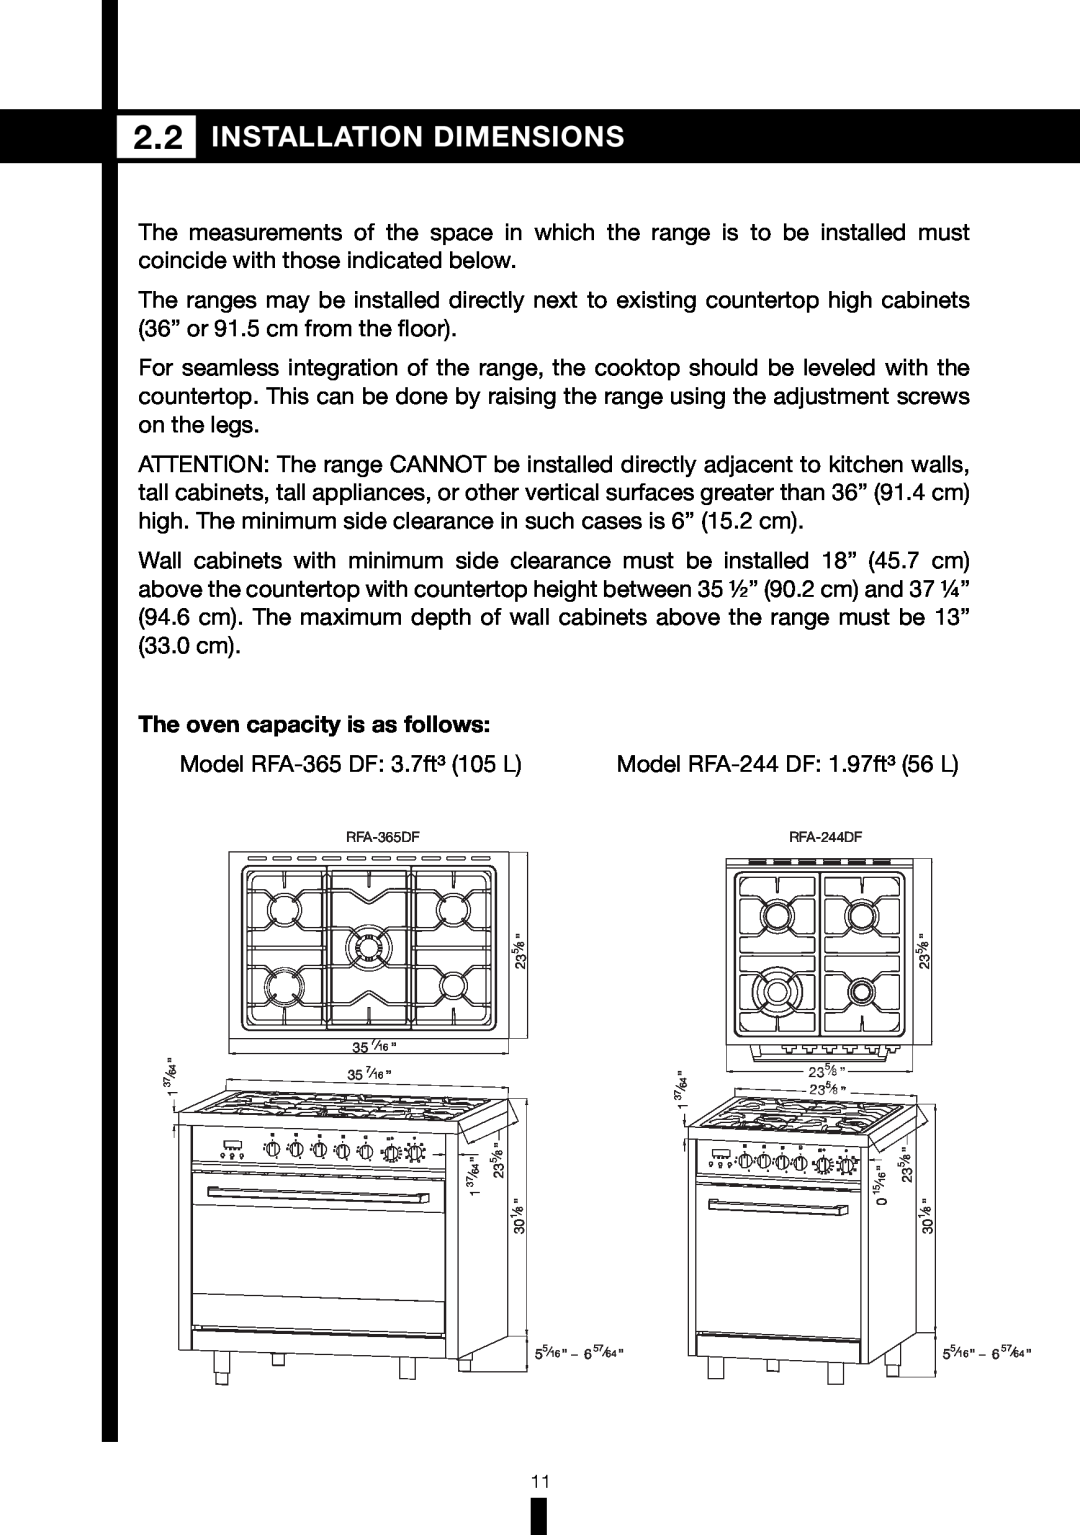 Fagor America RFA-244 DF, RFA-365 DF manual Installation Dimensions, The oven capacity is as follows 